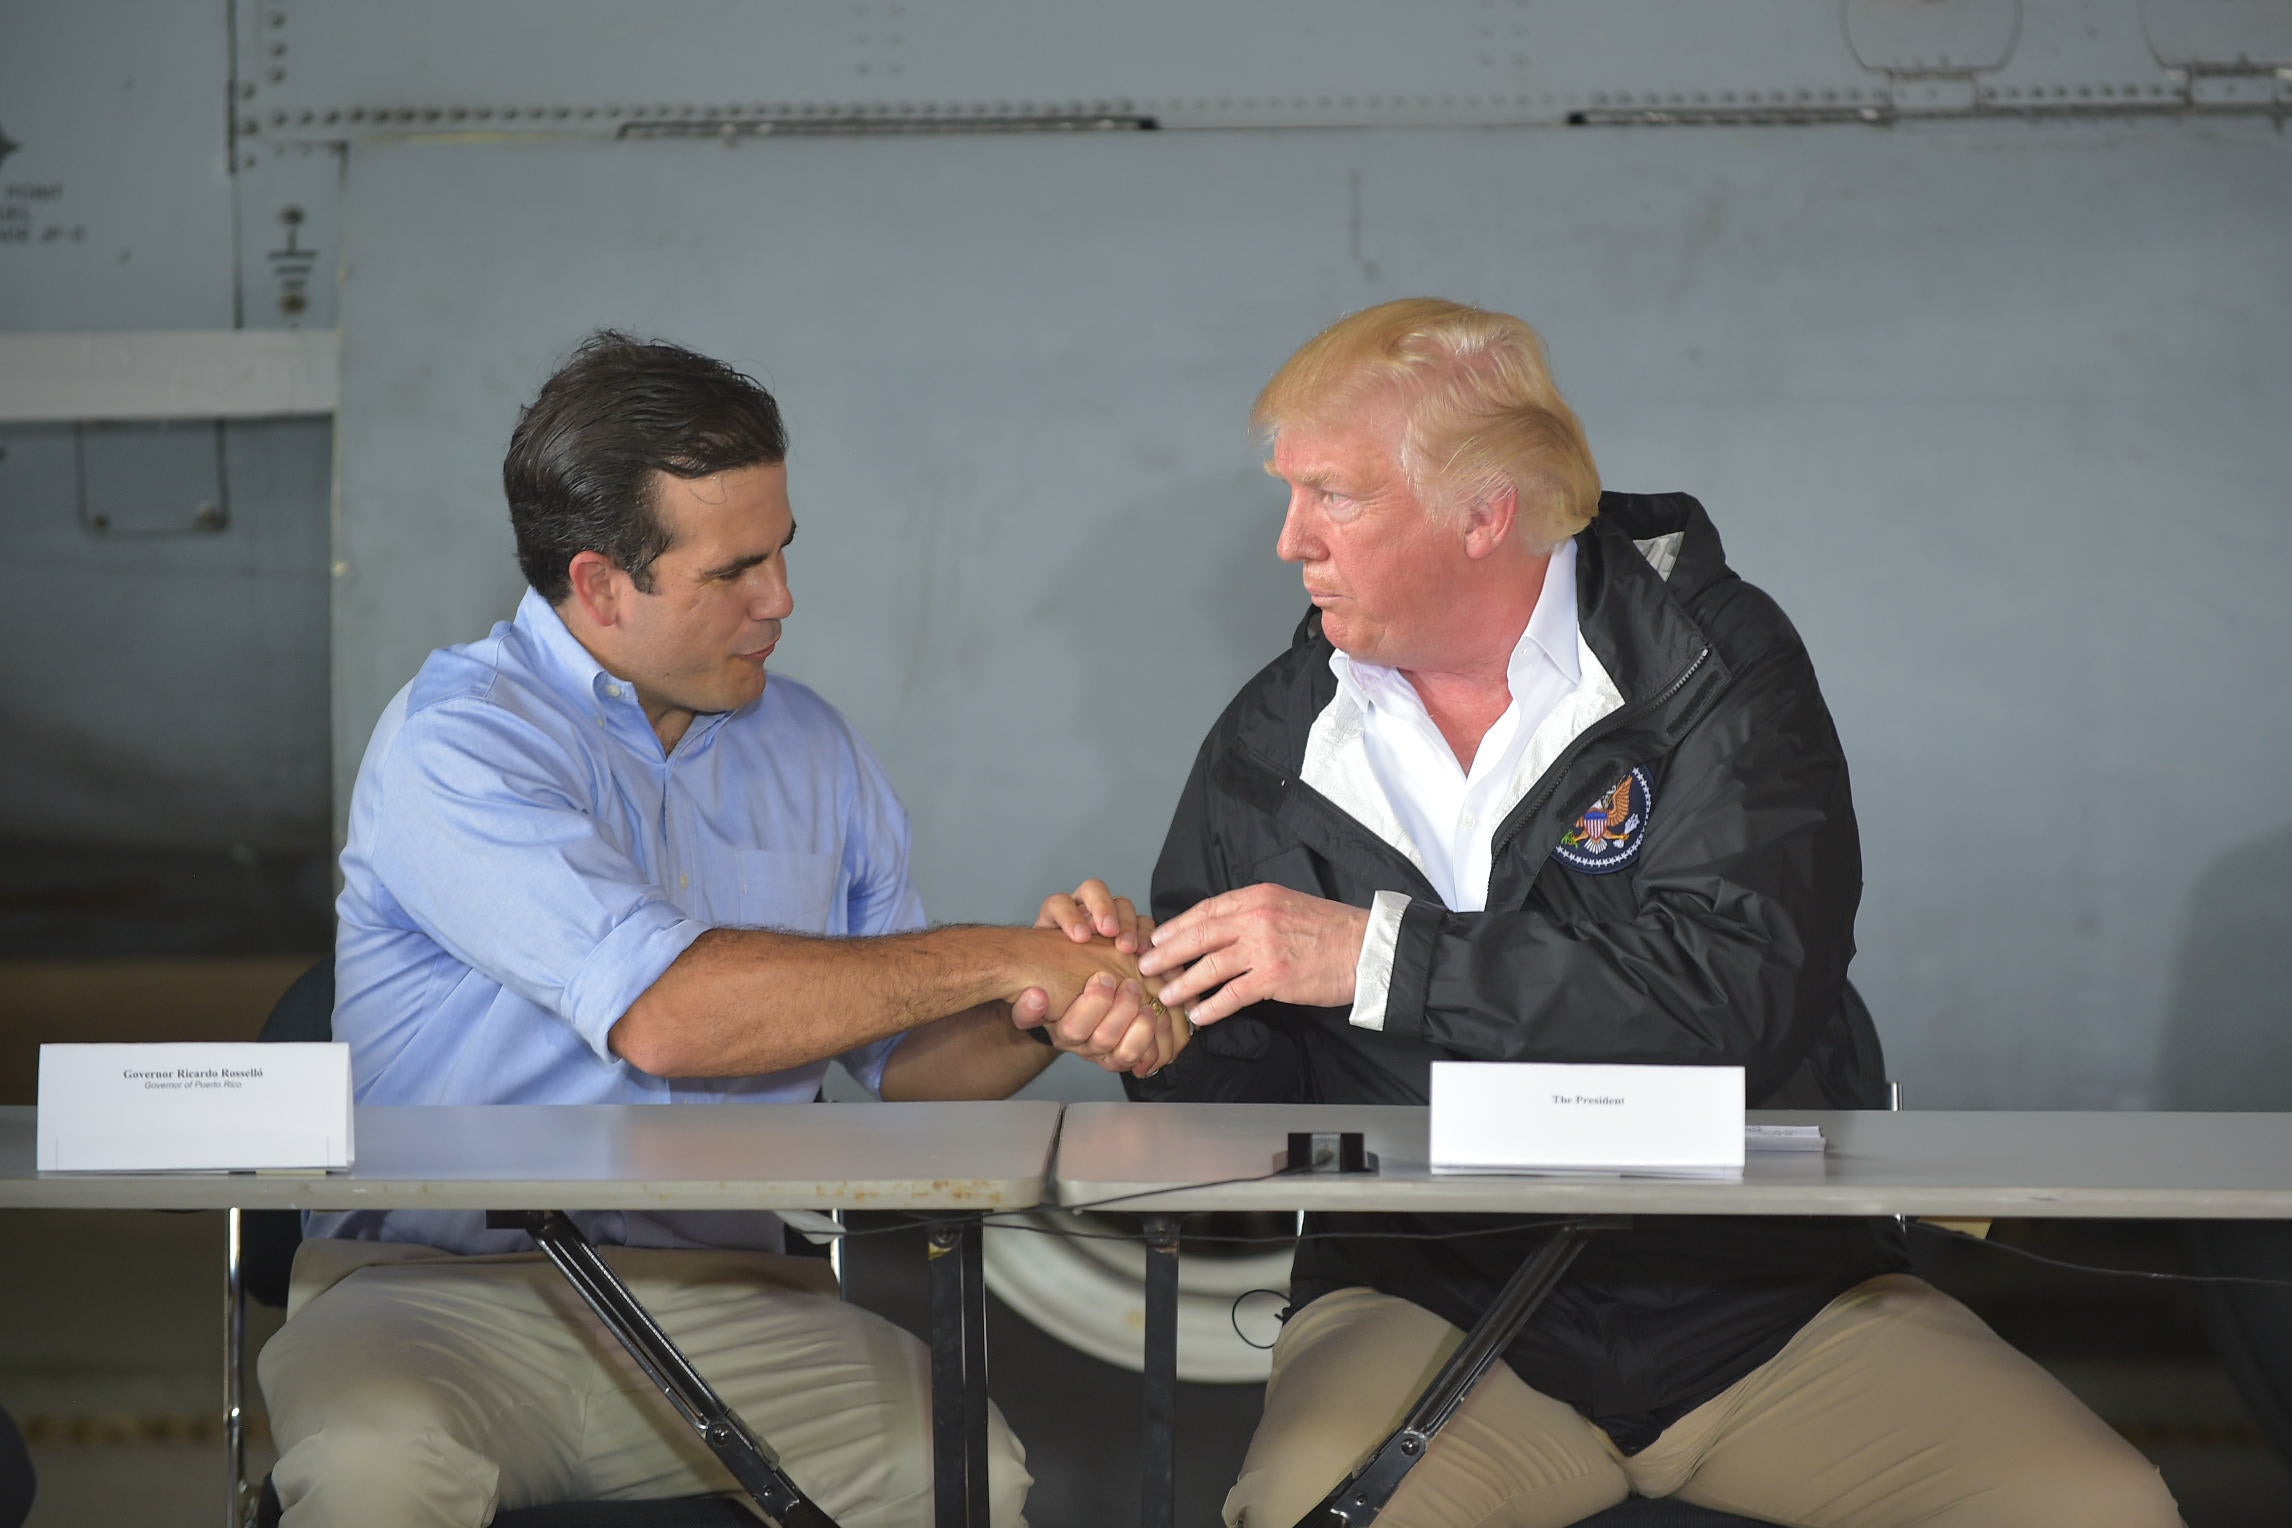 Trump and Rossello met in Puerto Rico on October 3, 2017